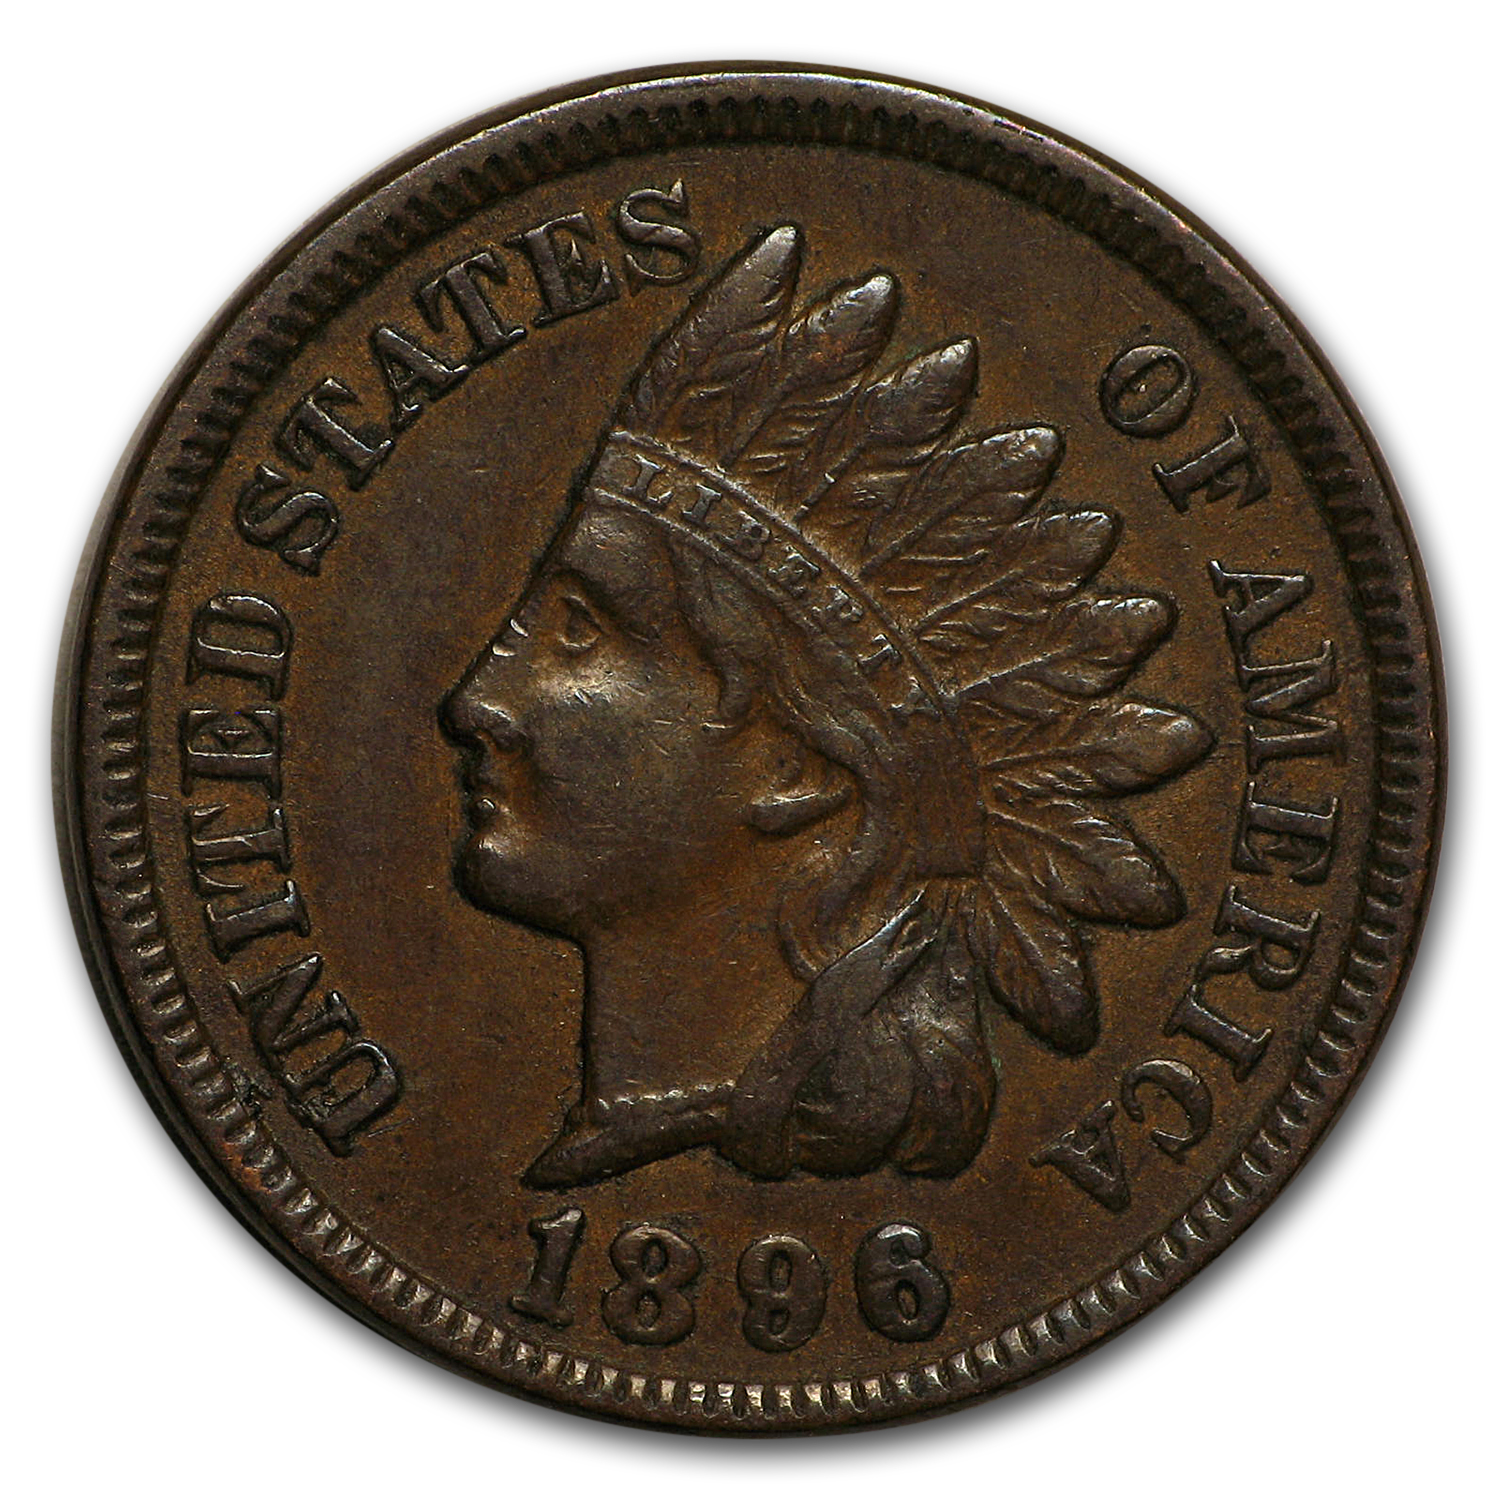 Buy 1896 Indian Head Cent AU